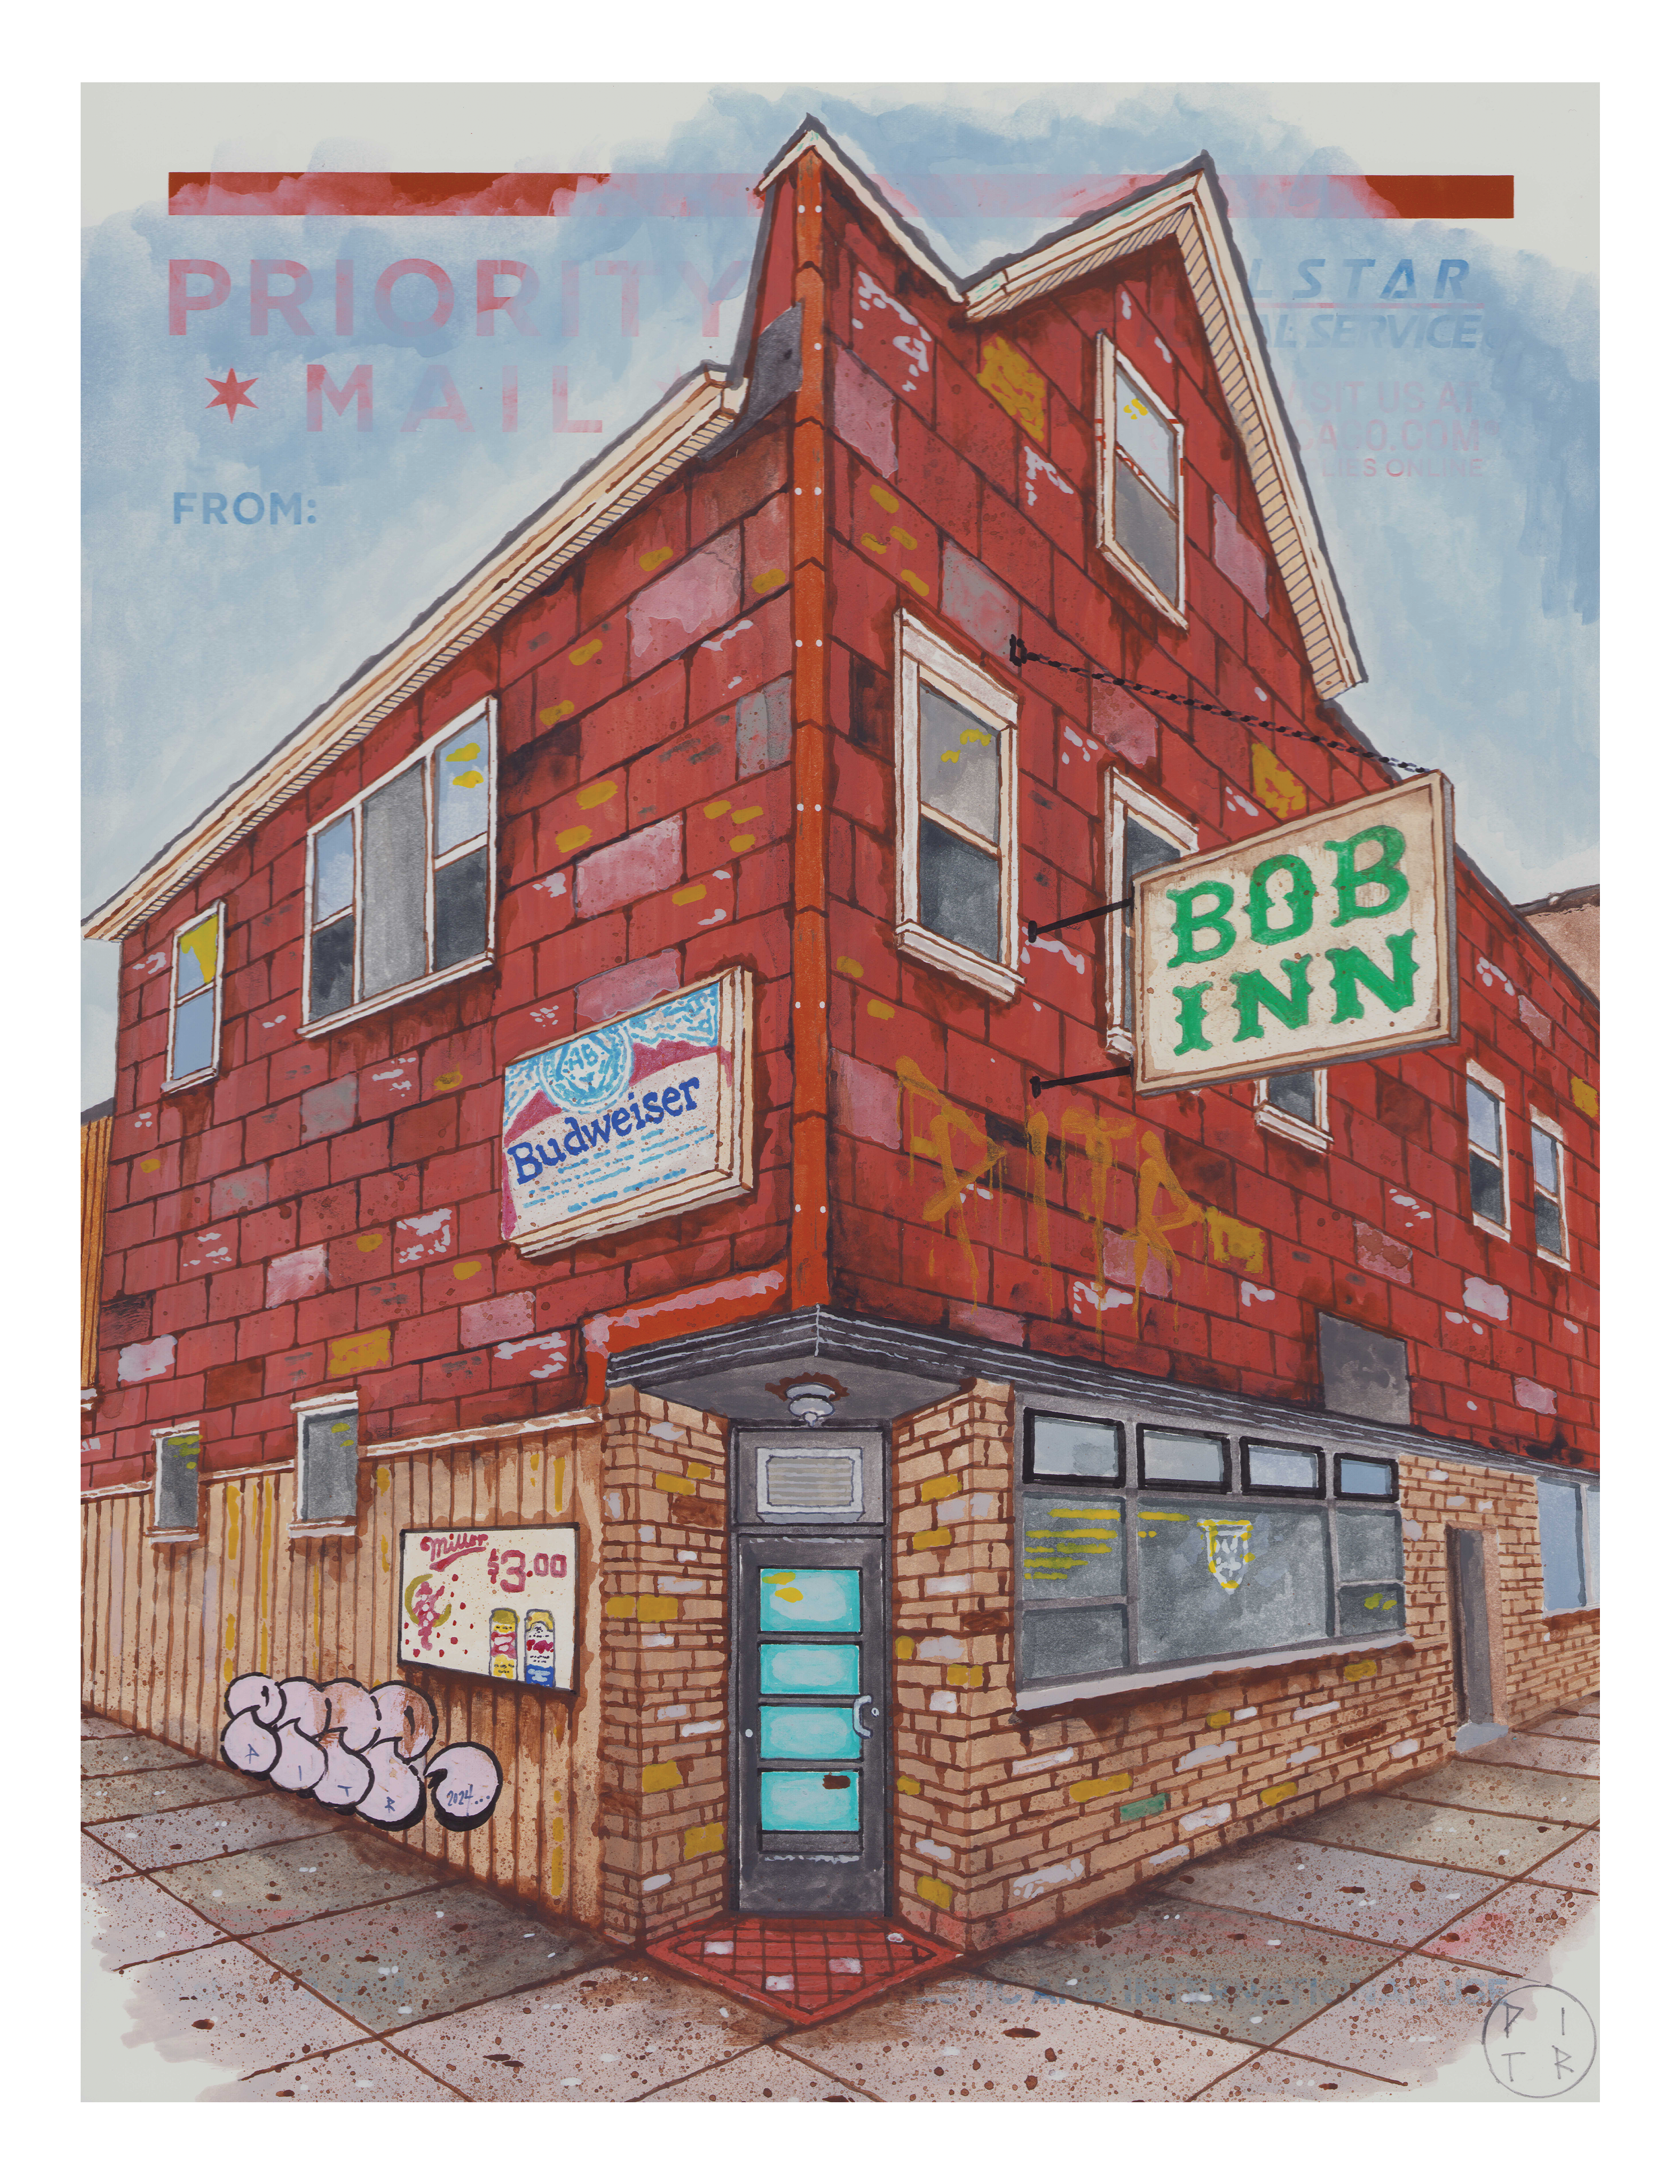 144. Bob Inn by Pizza in the Rain